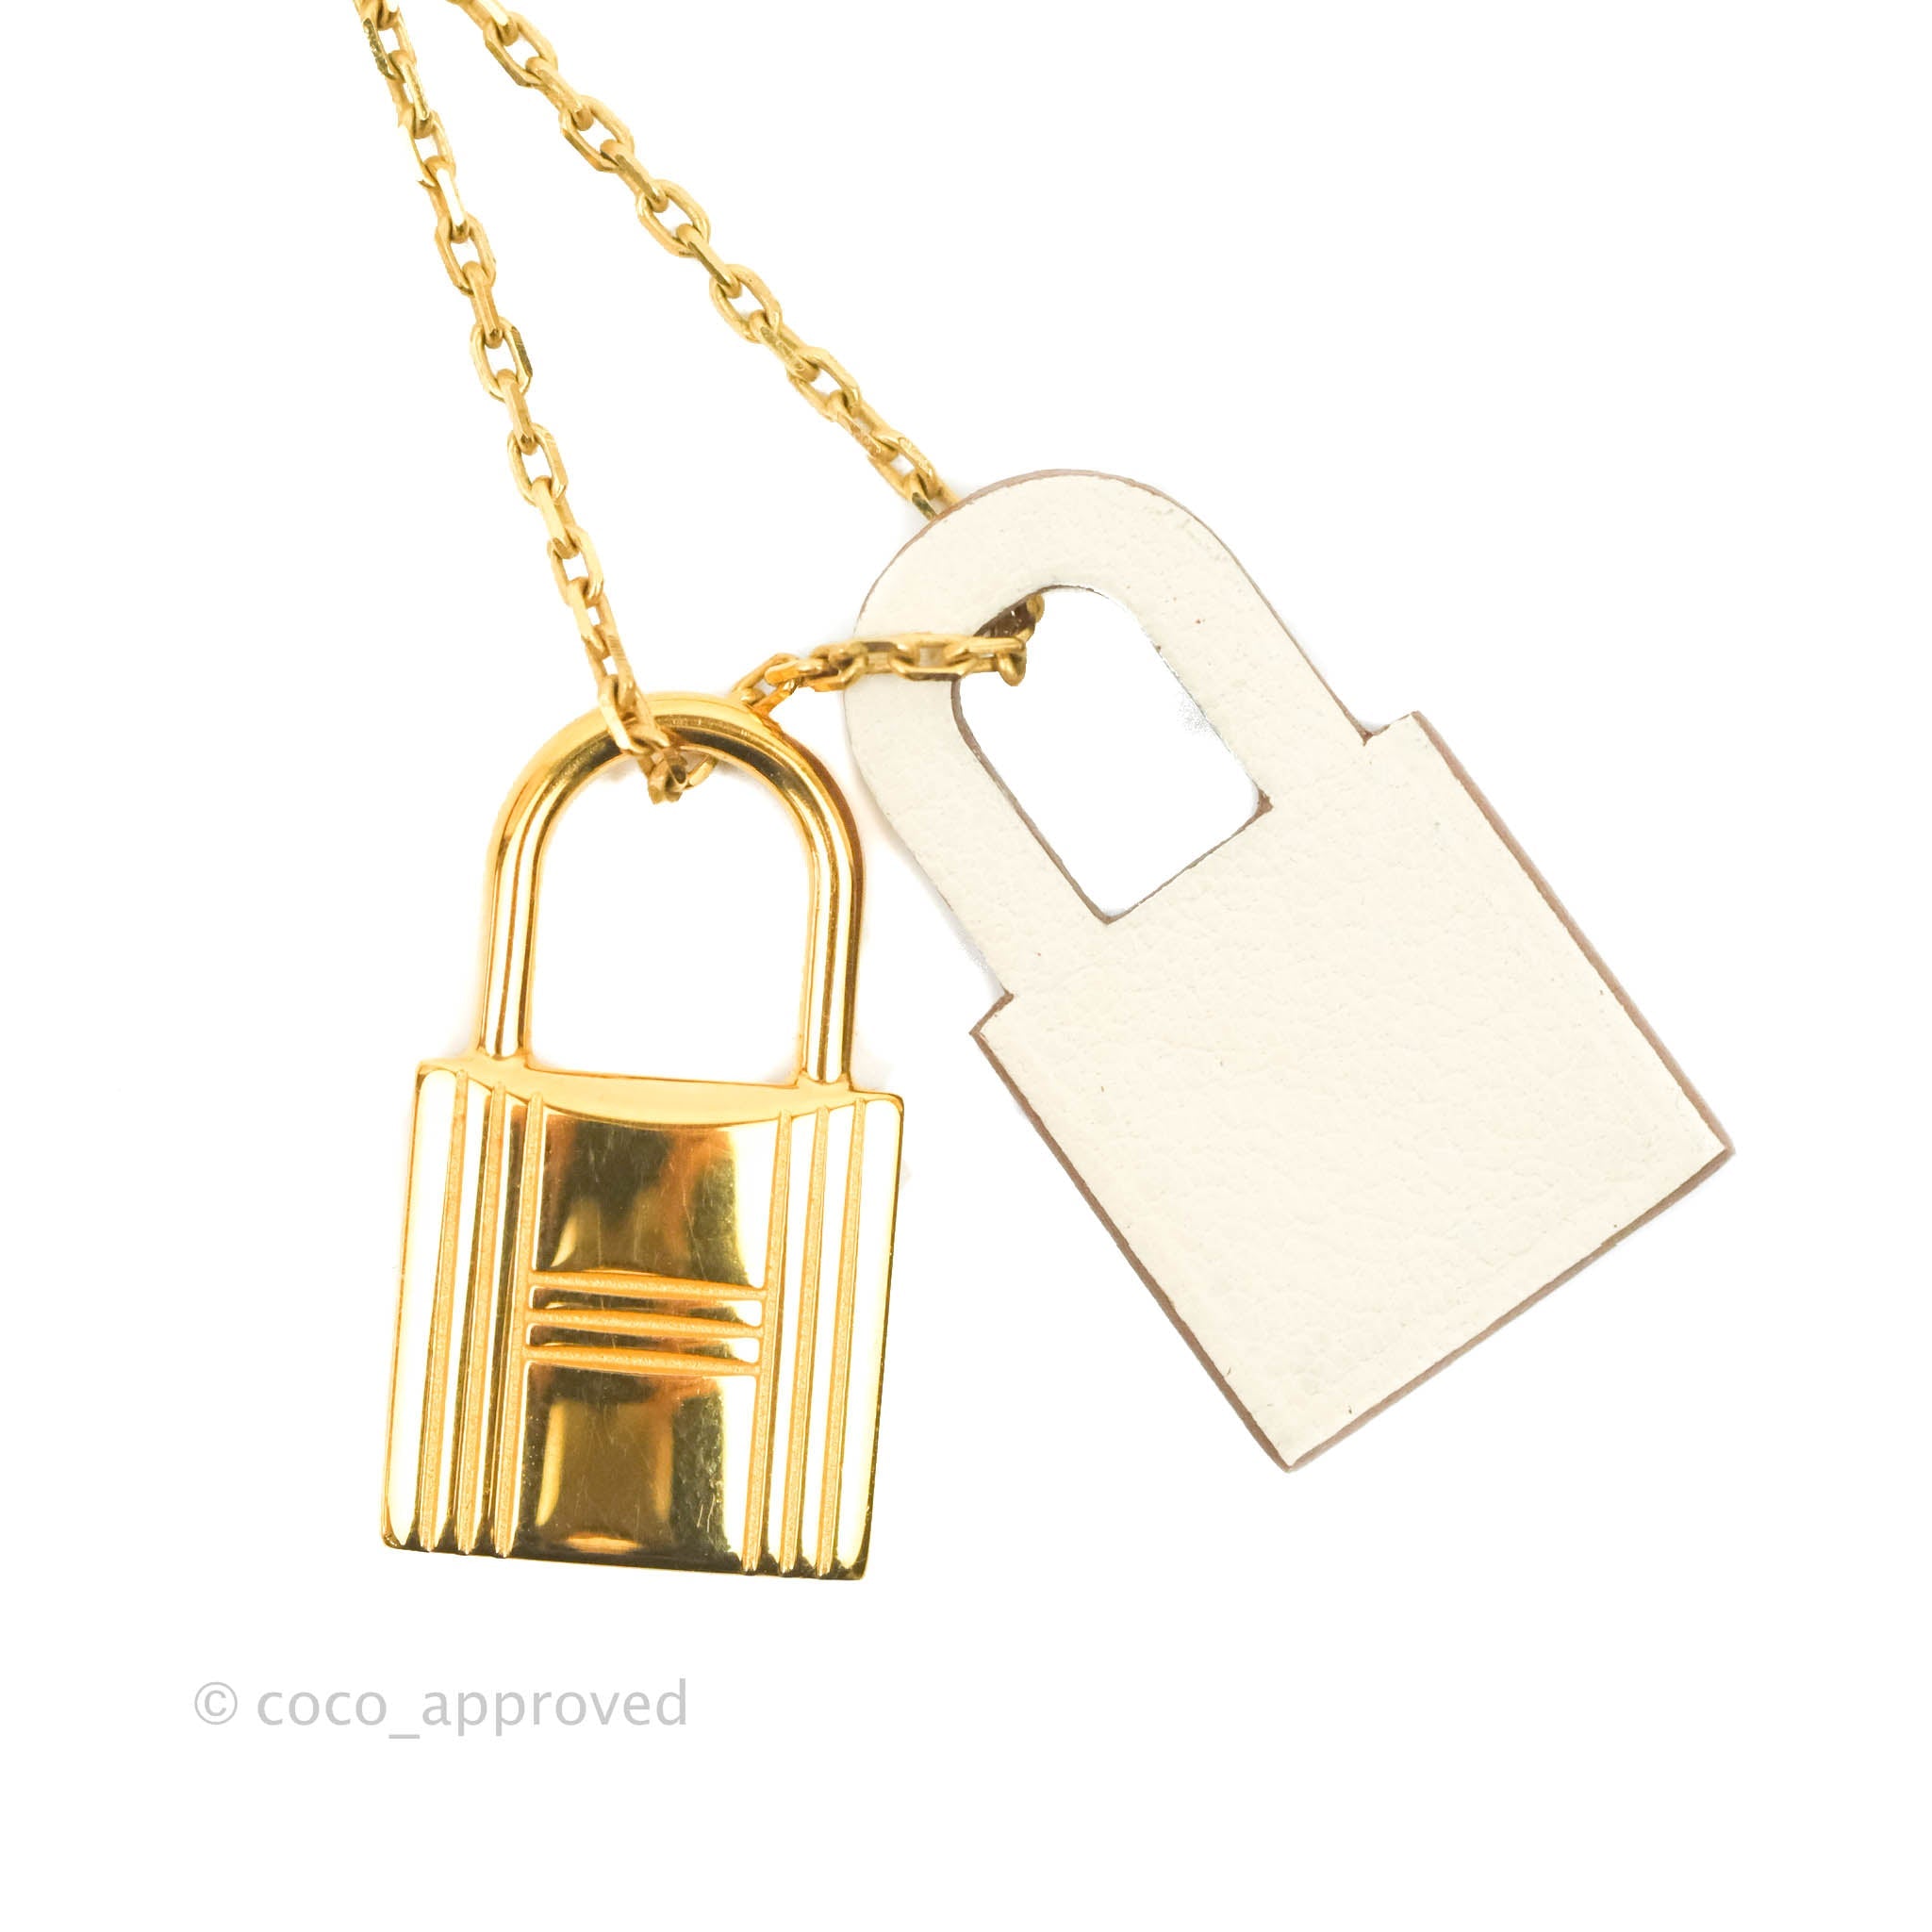 Celine Lock & Key Necklaces Set